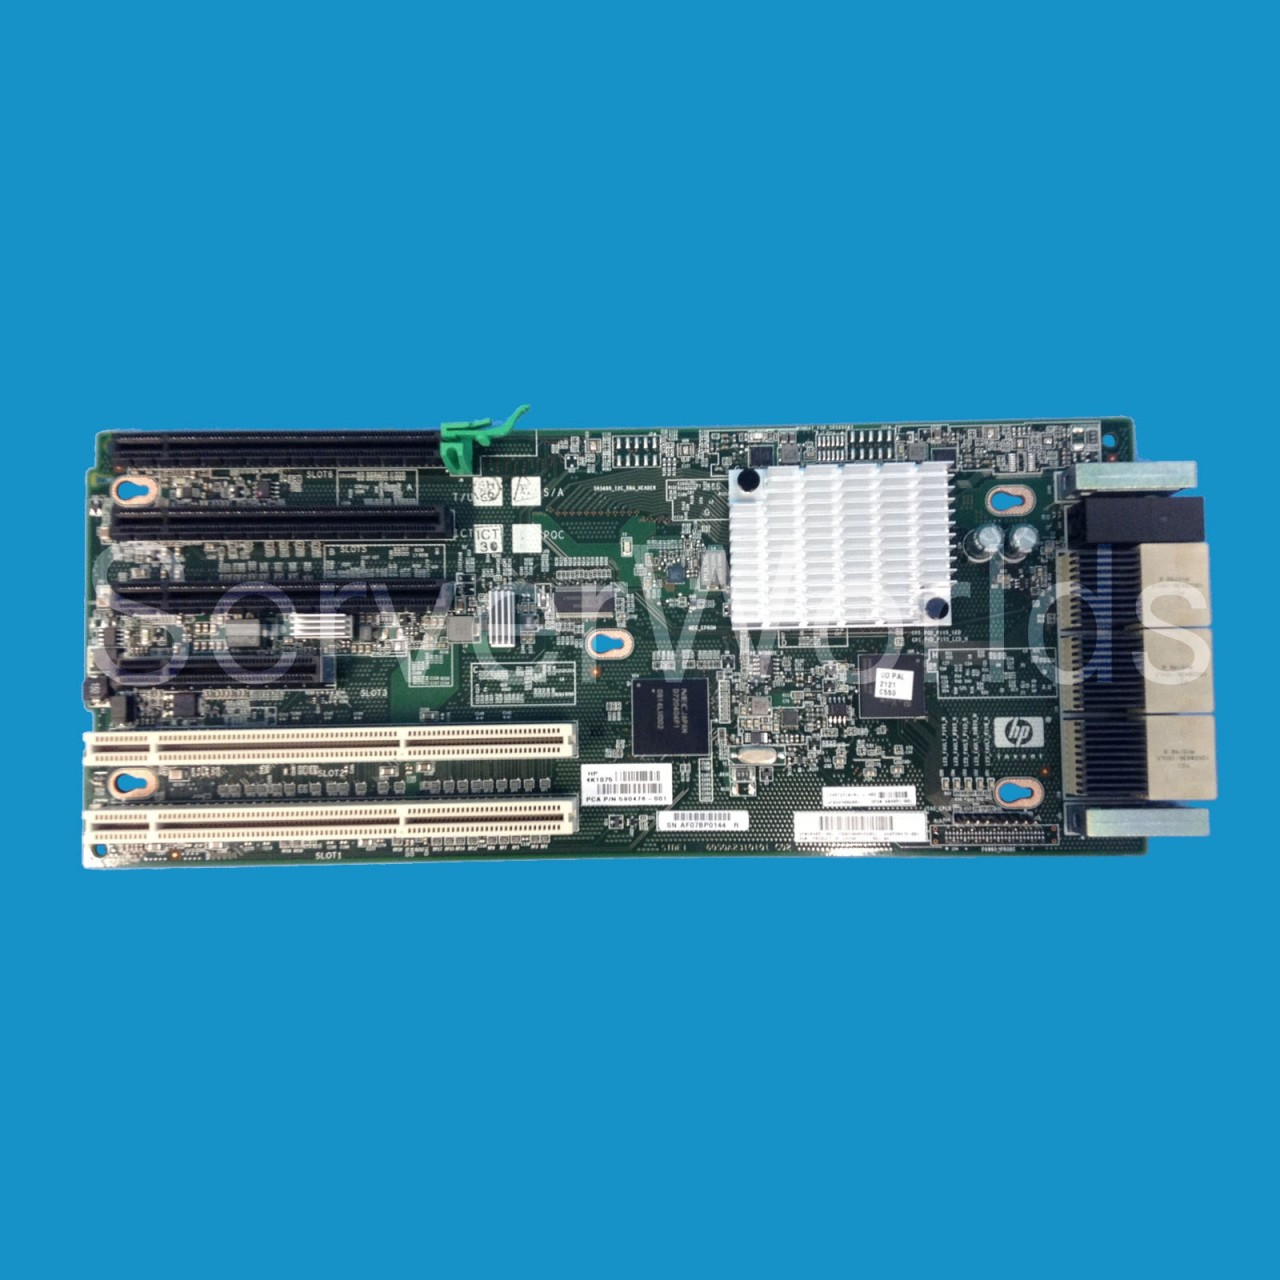 President Decoratie Geld rubber HP DL585 G7 PCIx/PCIe Expansion Board, 604051-001, 659807-B21